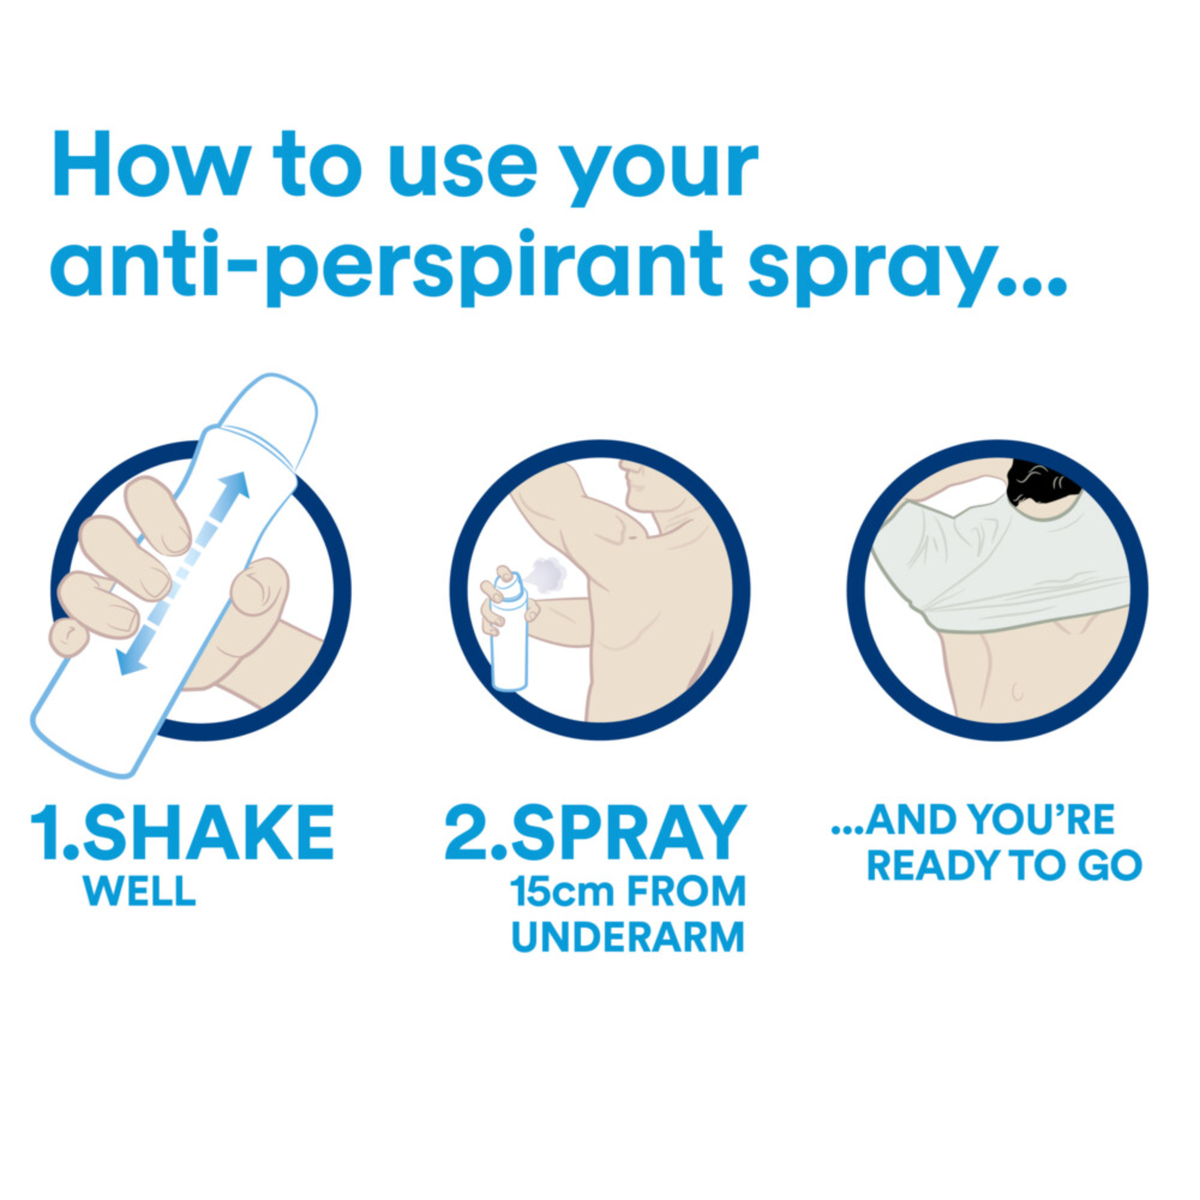 Dove Men+Care Anti-Perspirant Deodorant Invisible Dry 150 ml